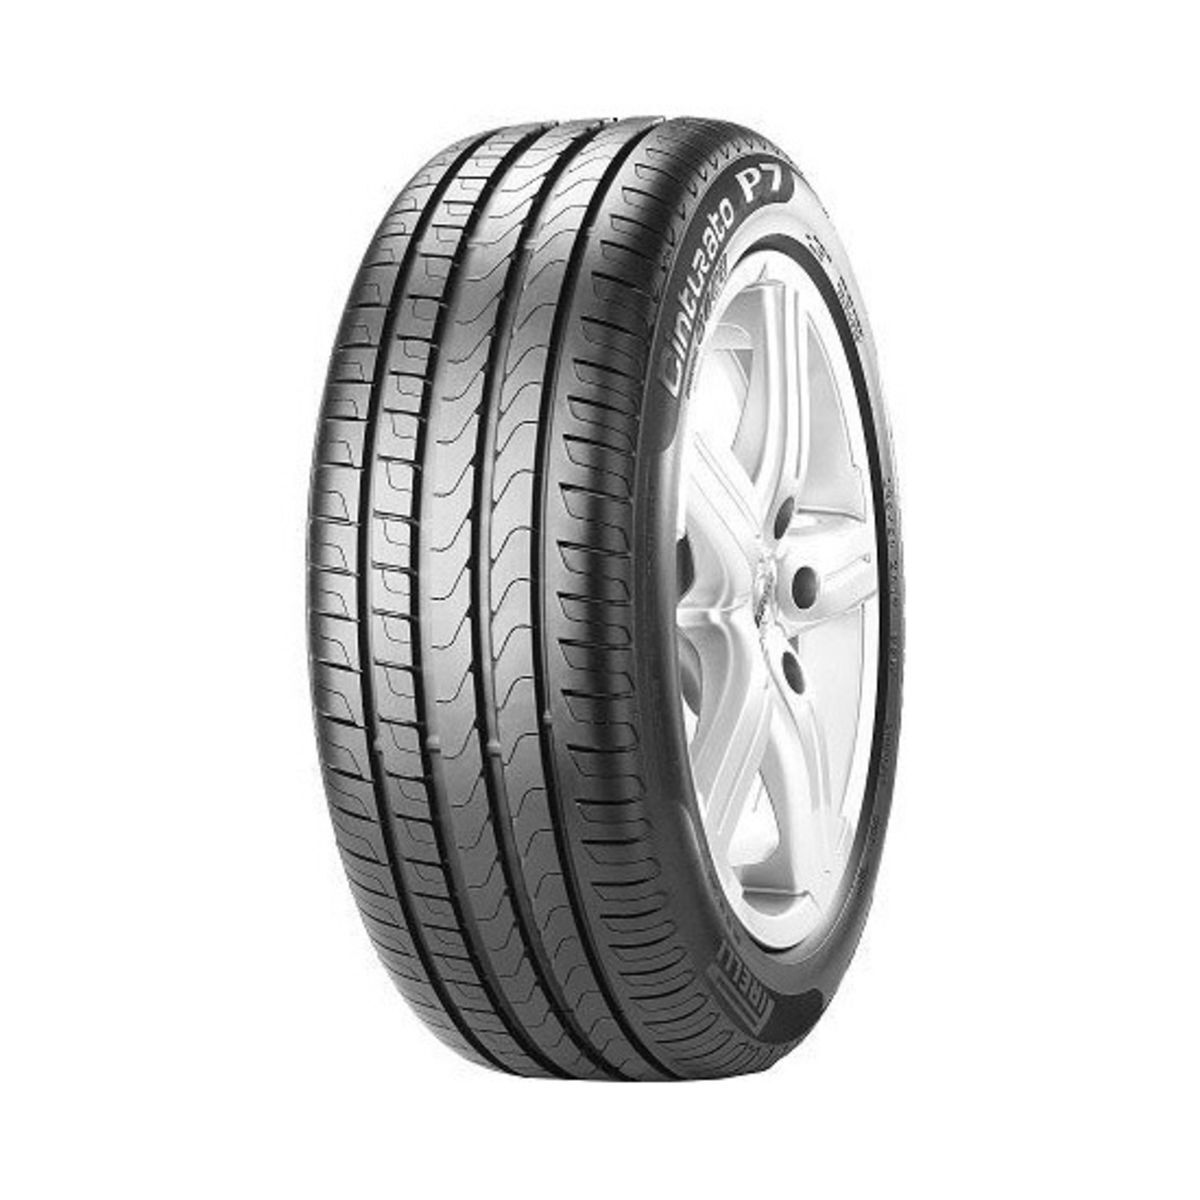 Neumáticos de verano PIRELLI Cinturato P7 225/55R16 95W